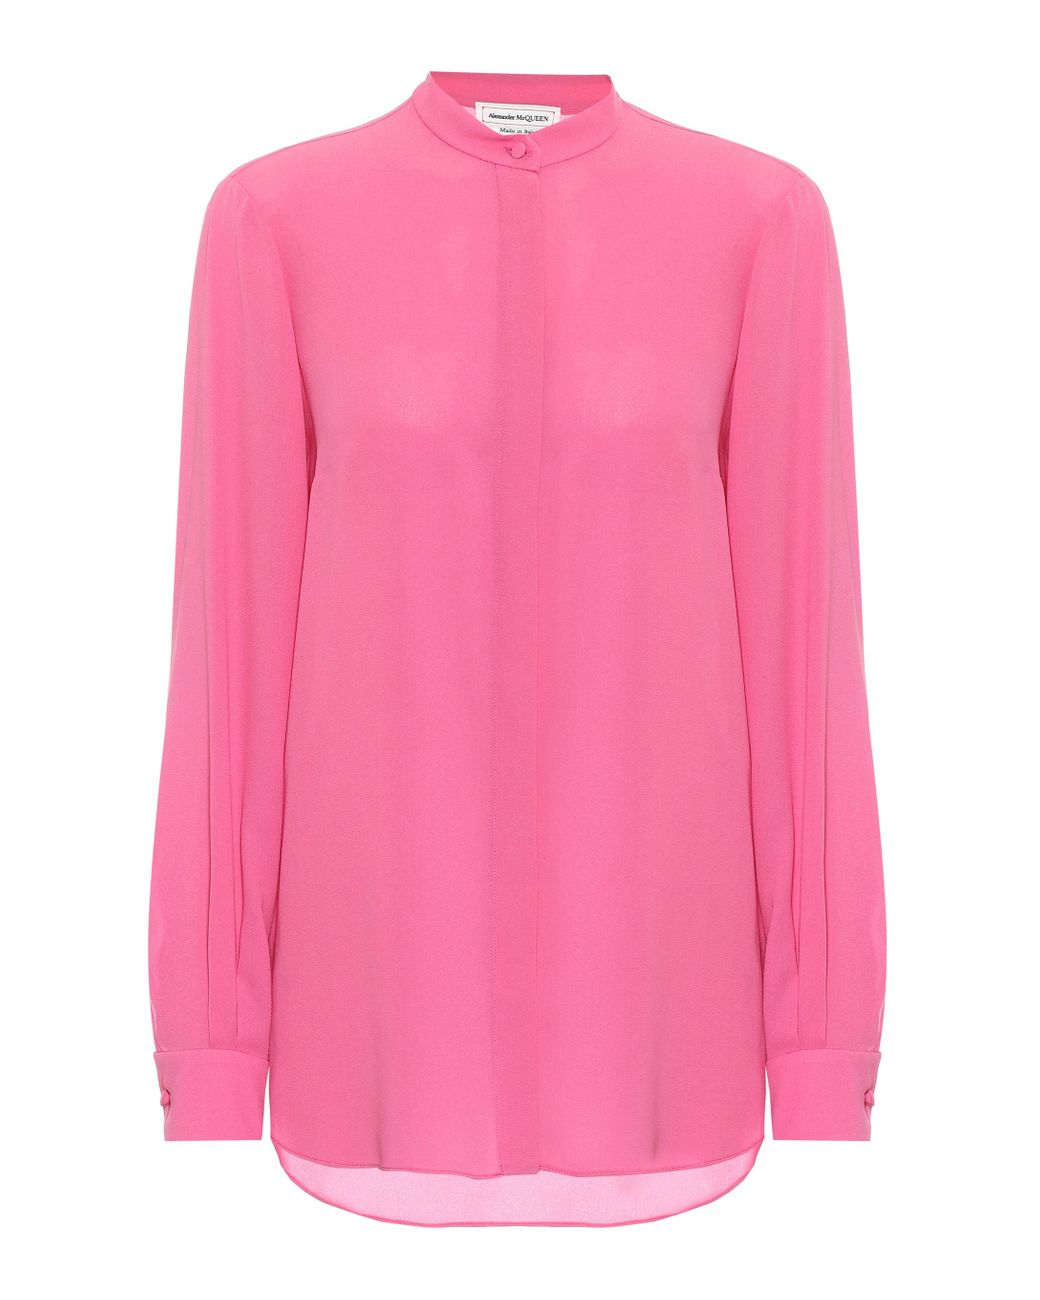 Alexander McQueen Silk Blouse in Pink - Lyst